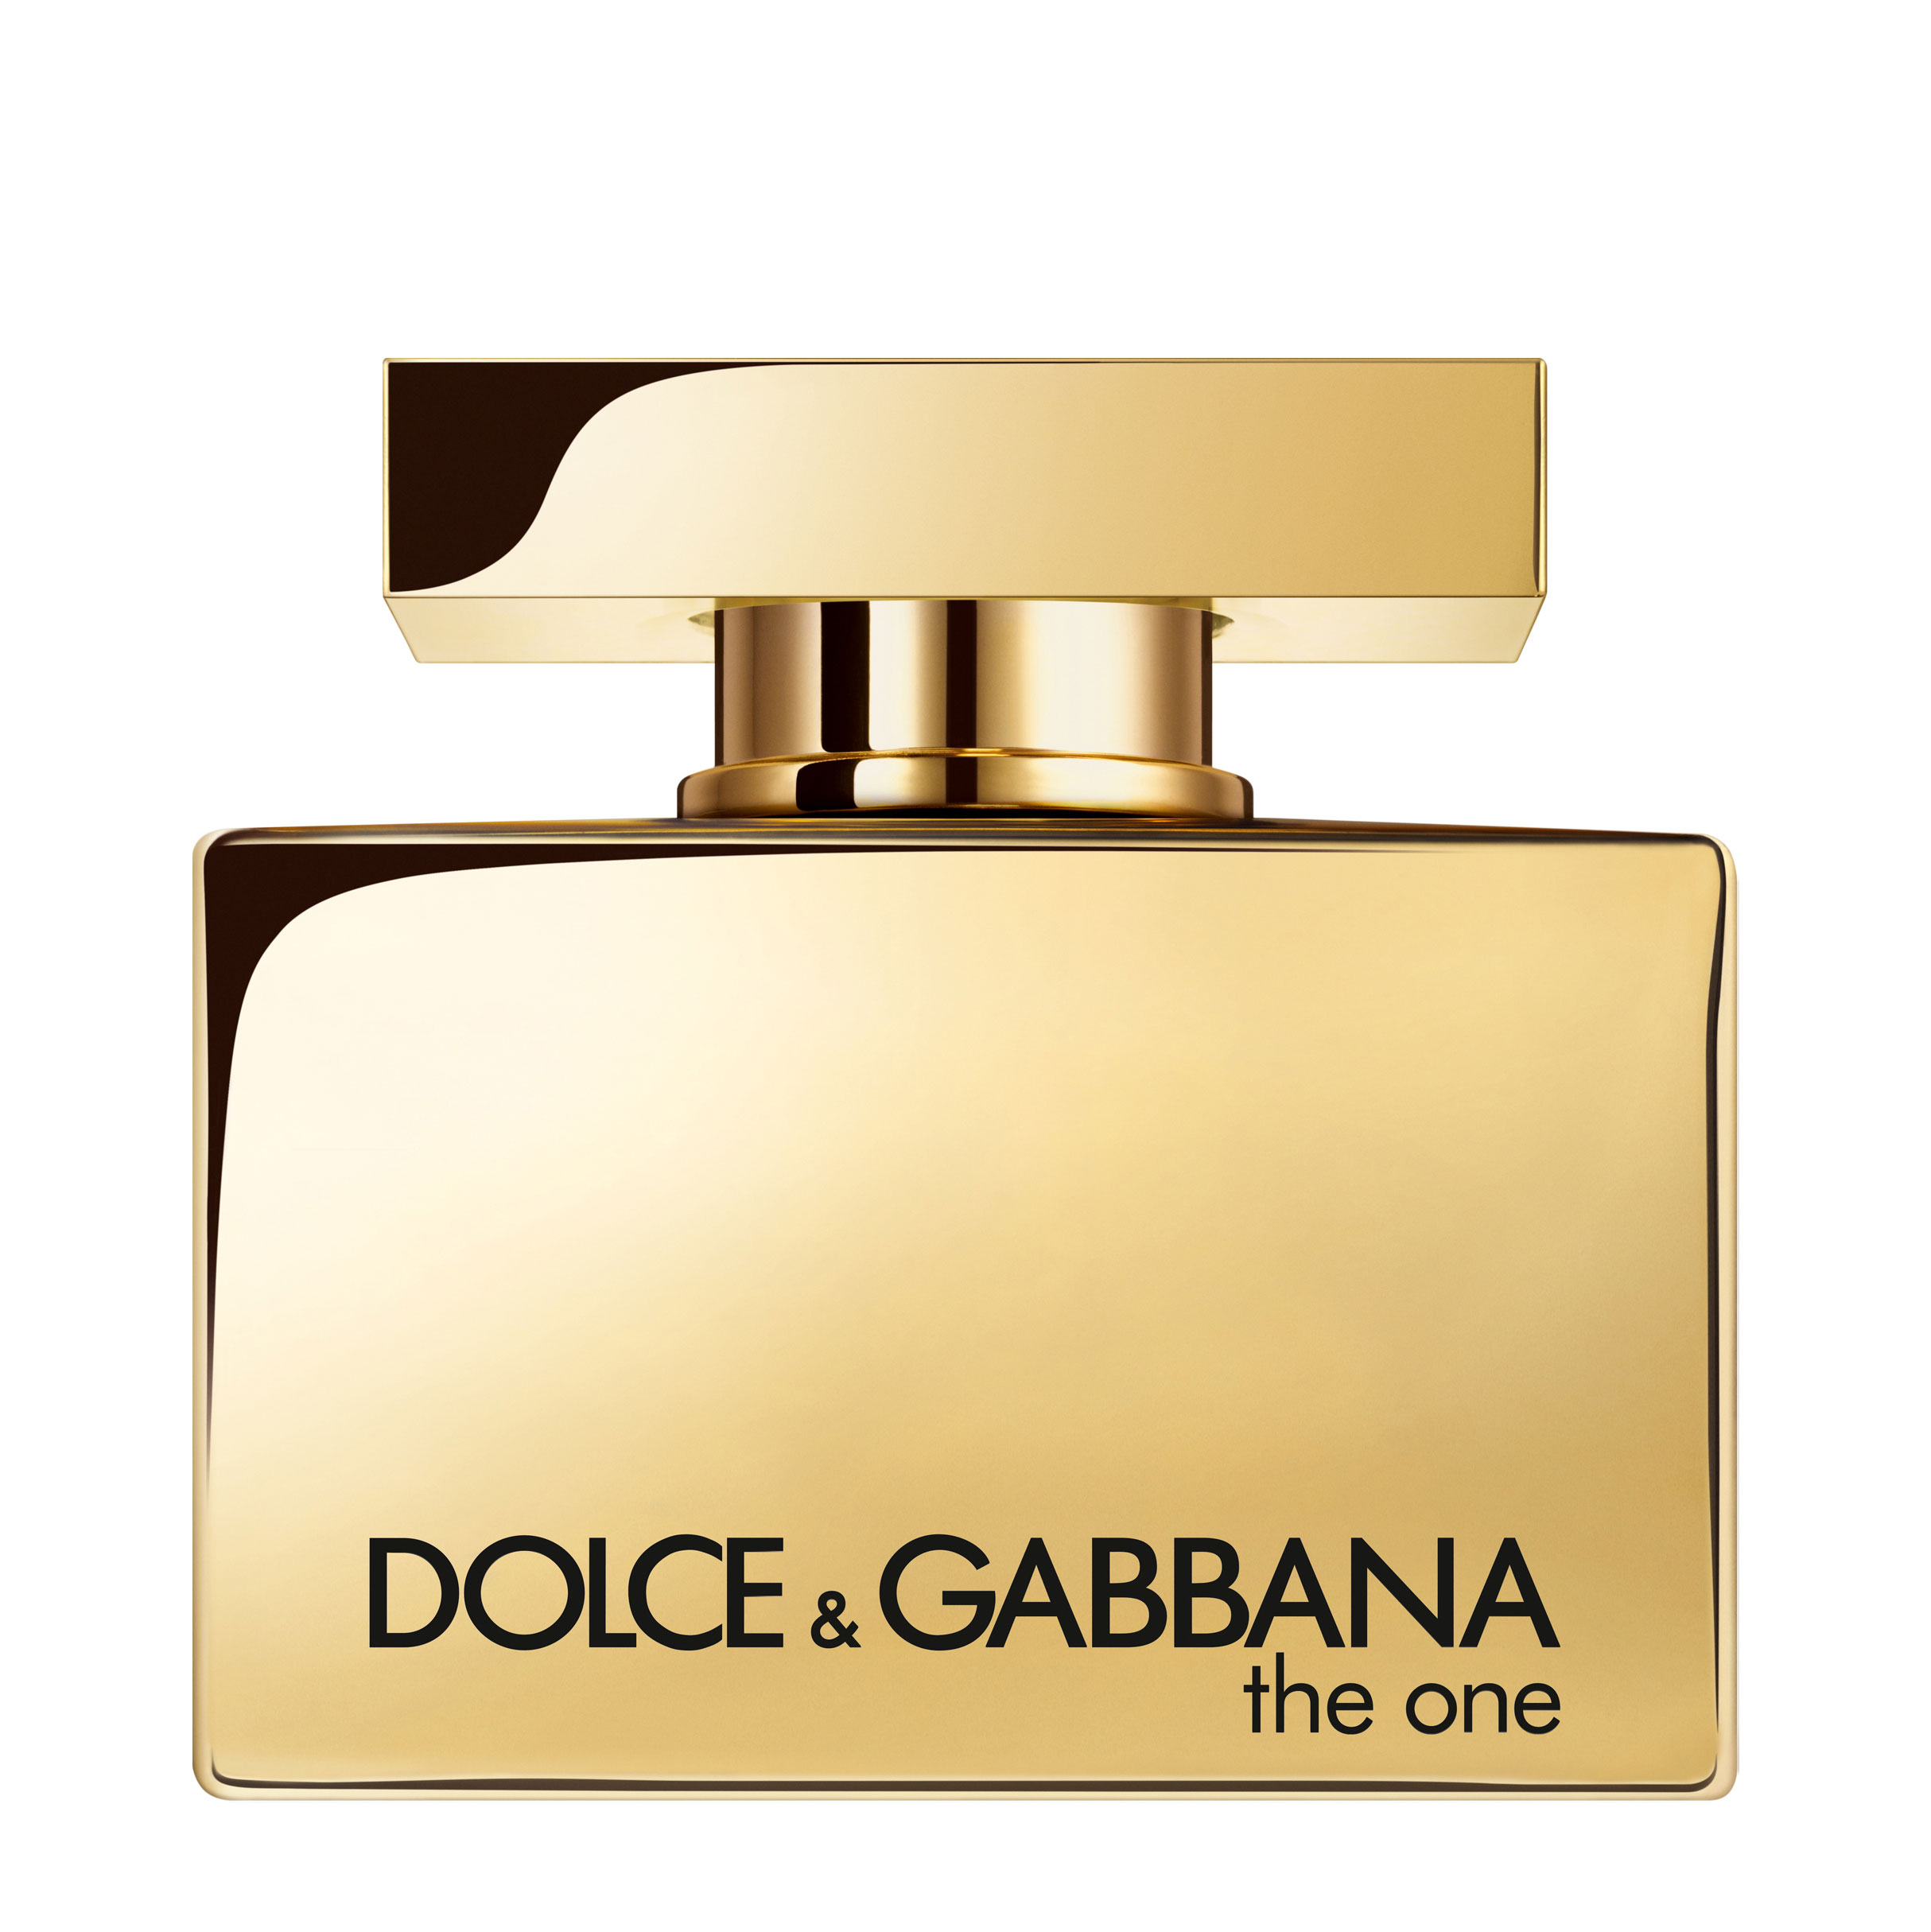 Купить дольче габбана ван. Dolce & Gabbana the one women EDP, 75 ml. Dolce Gabbana the one Gold intense 30 ml. Dolce Gabbana the one Gold intense. Духи Gold Dolce Gabbana the one.